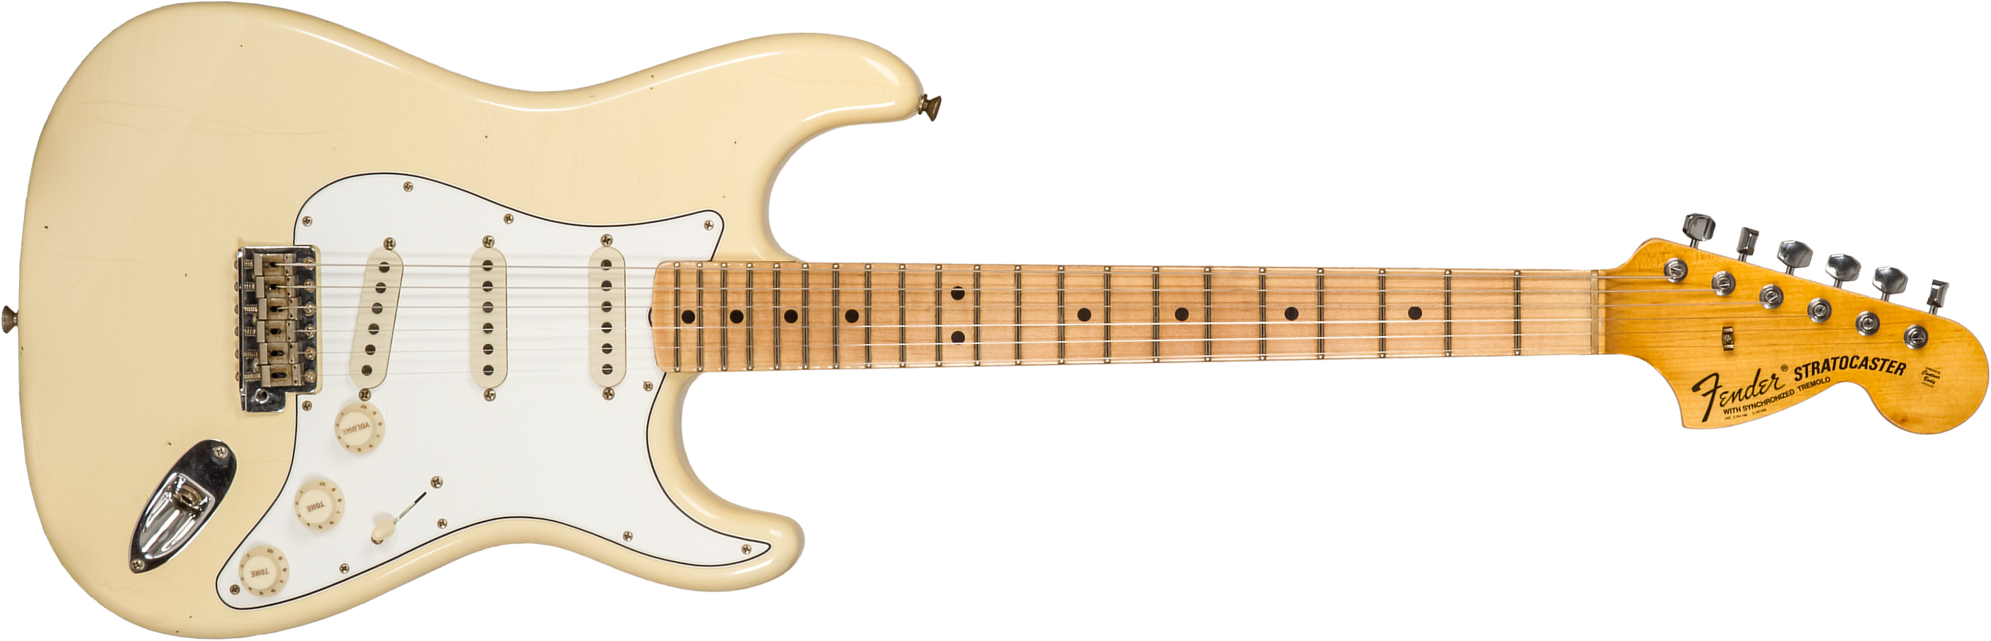 Fender Custom Shop Strat 1969 3s Trem Mn #cz576216 - Journeyman Relic Aged Vintage White - Str shape electric guitar - Main picture